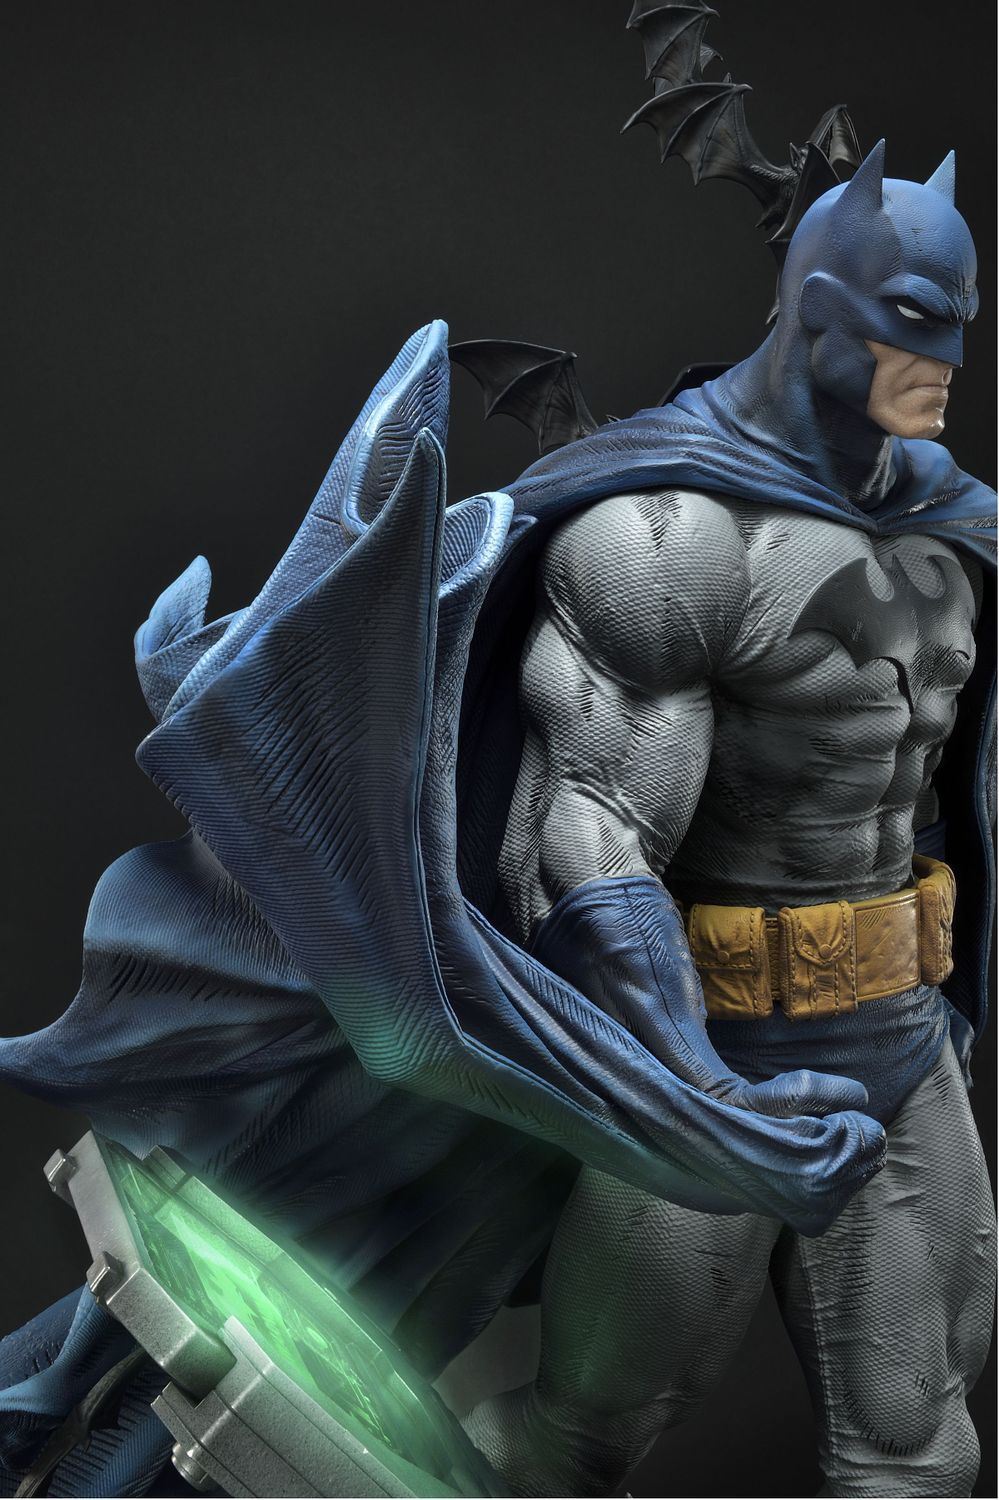 Prime 1 Studio: Batman - Hush Museum Masterline Batman (Batcave Ver.) Deluxe 1/3 Scale Statue Limited Edition